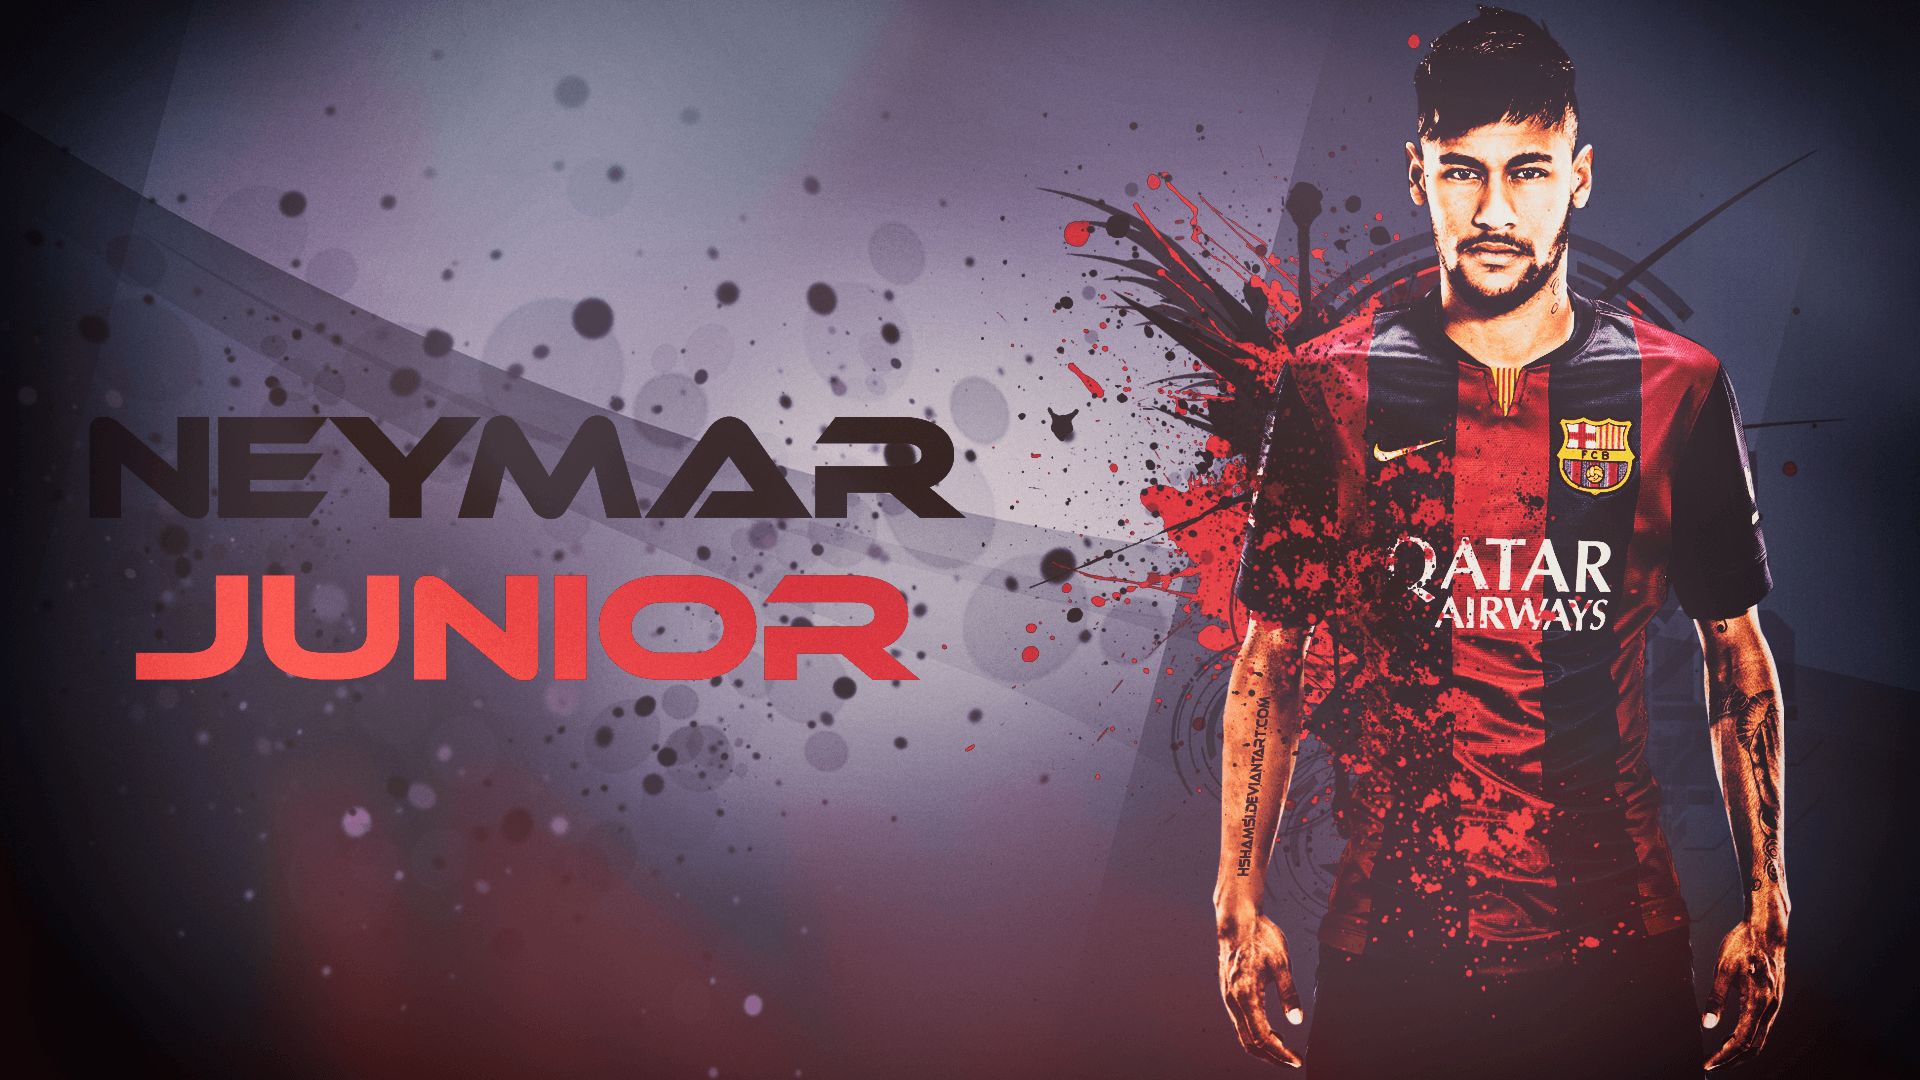 Neymar HD Wallpaper 2015. Image Wallpaper